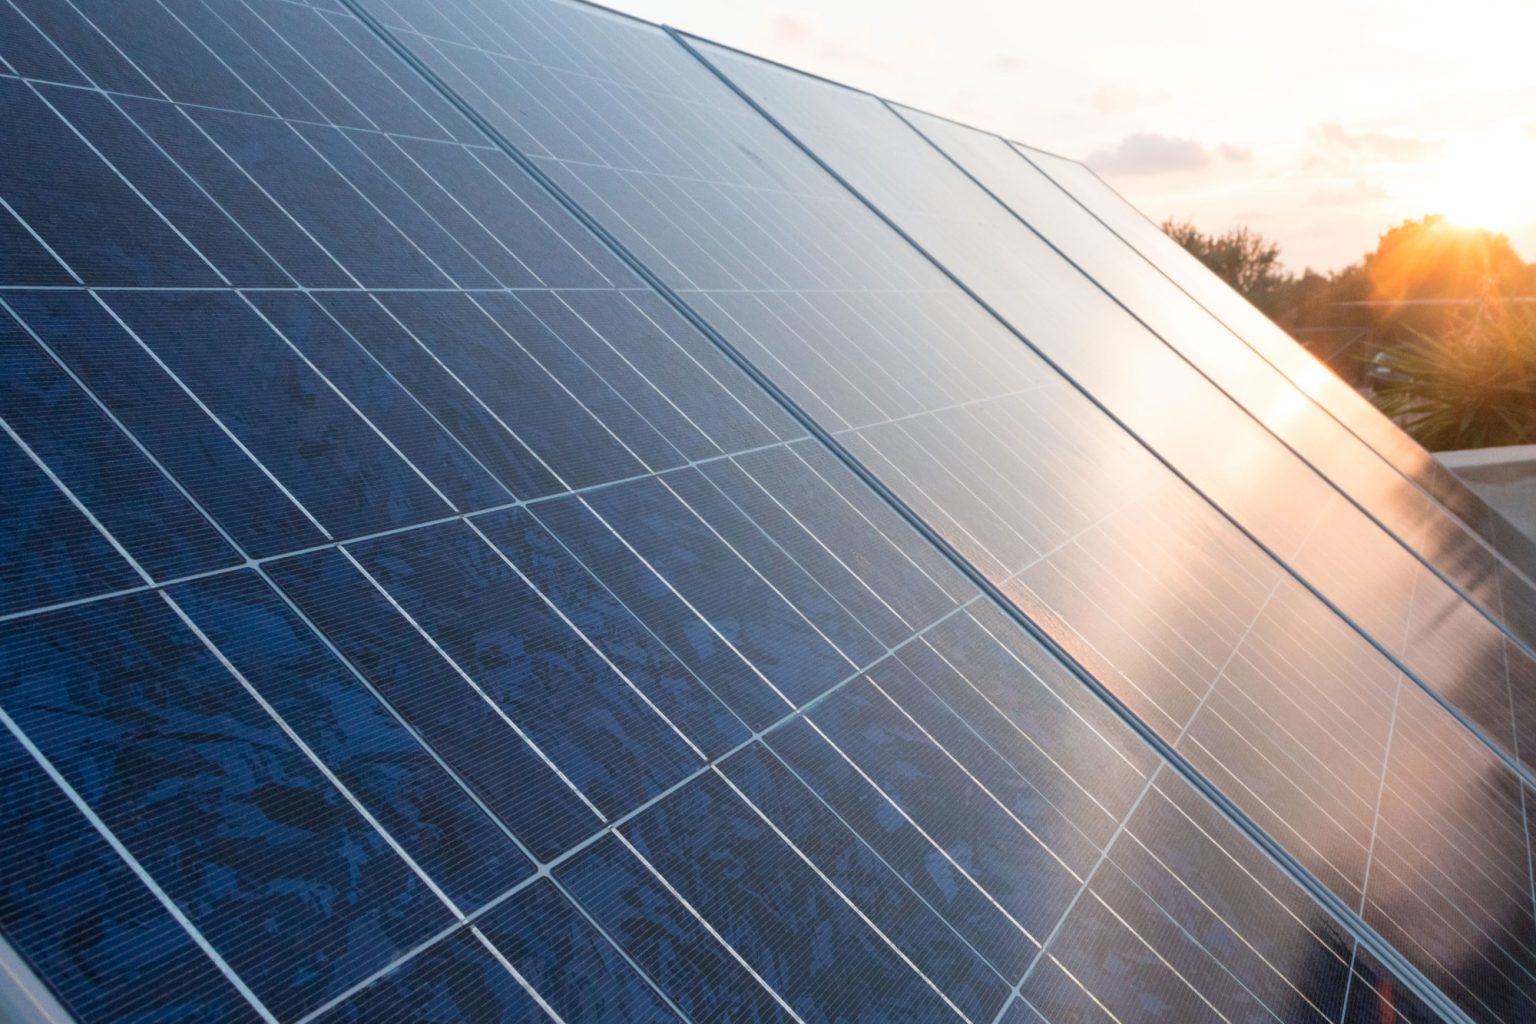 Solar Power 101: How Much Power Does a Solar Panel Produce?